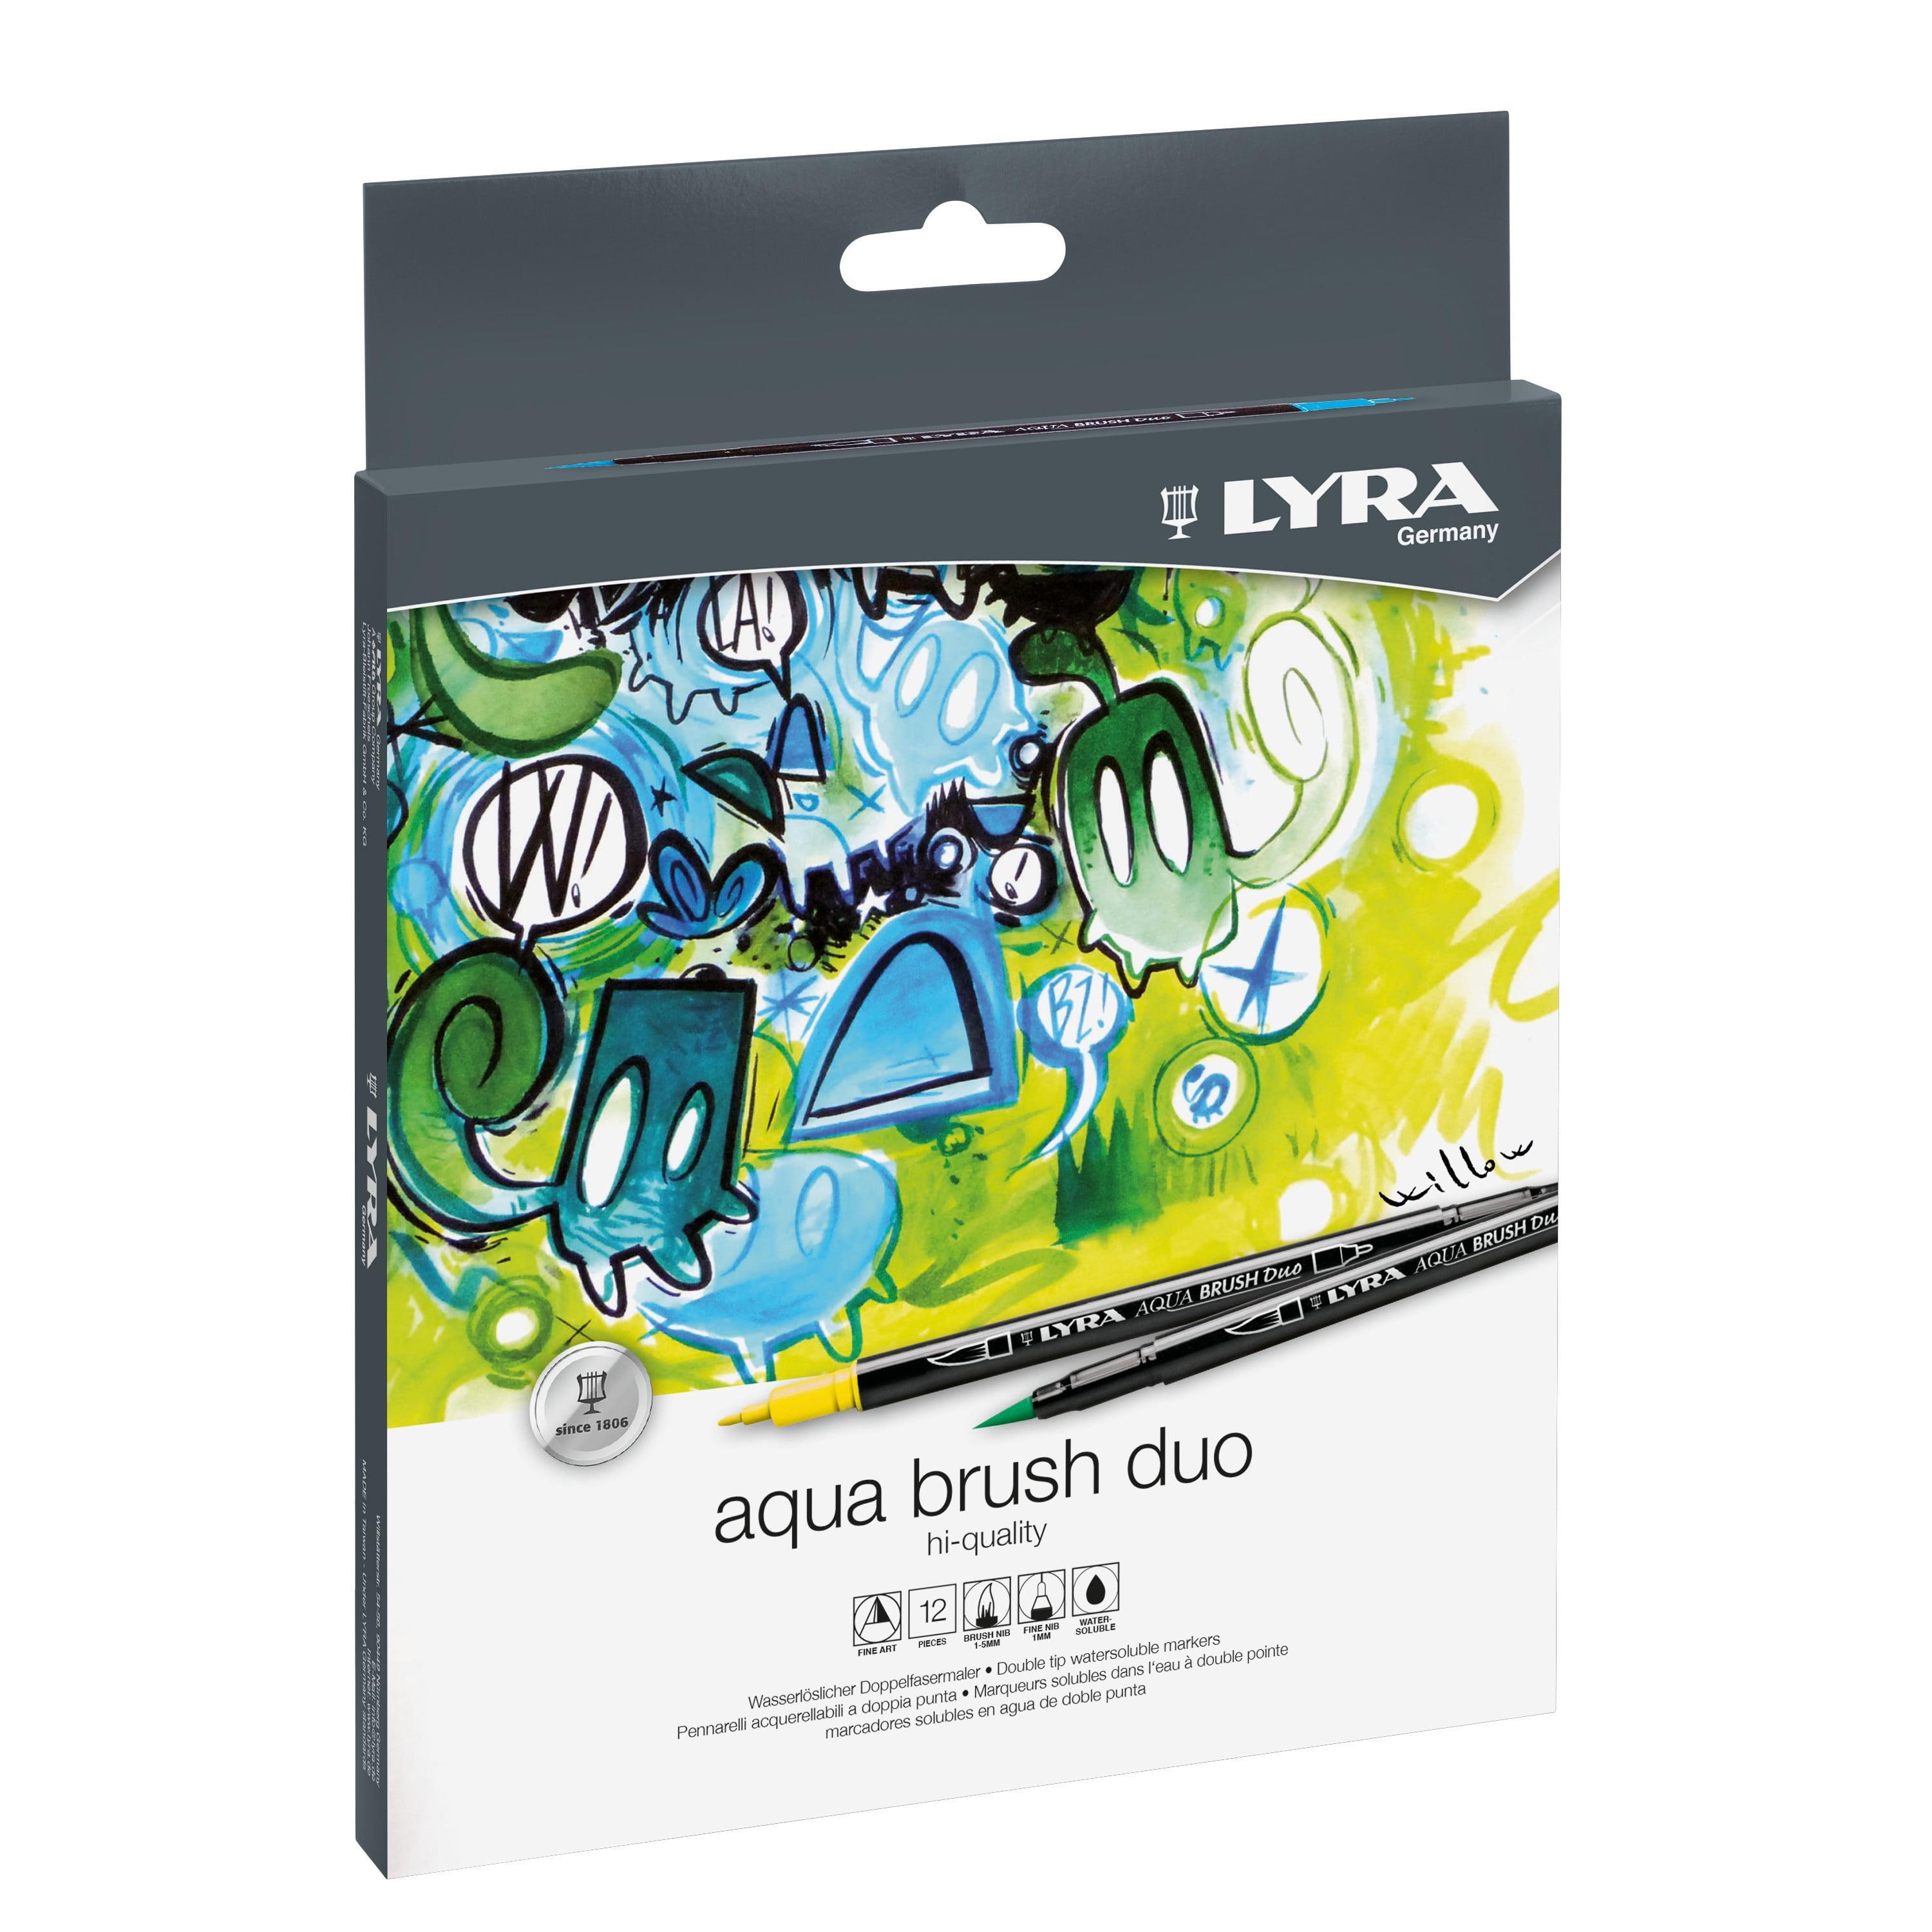 LYRA Aqua Brush Duo, Set, Assorted Water-soluble Marker Pens, 12 